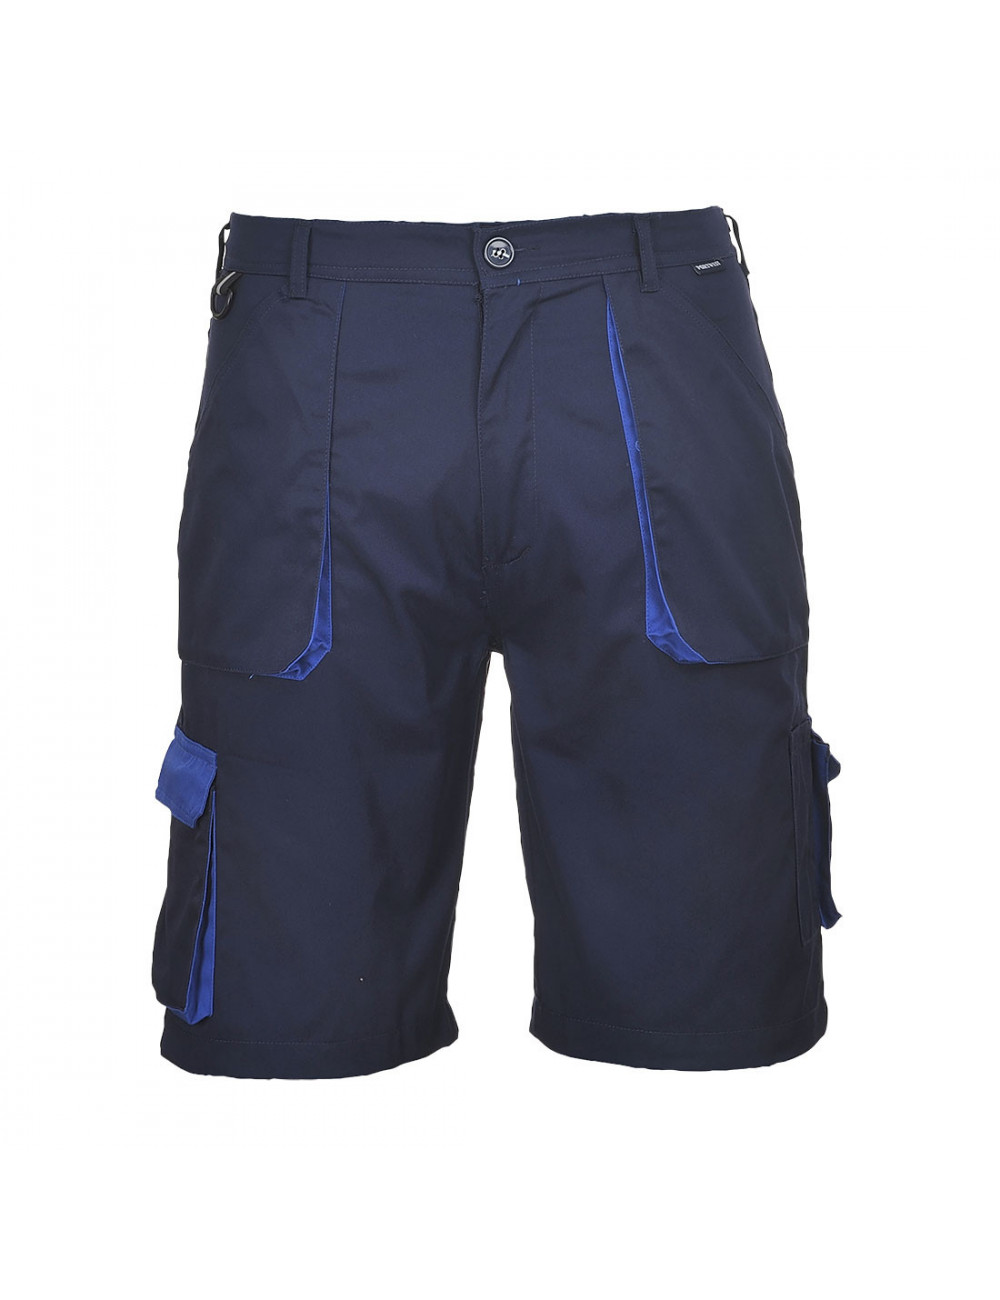 Kontrast-Texo-Shorts in Marineblau, Portwest Portwest